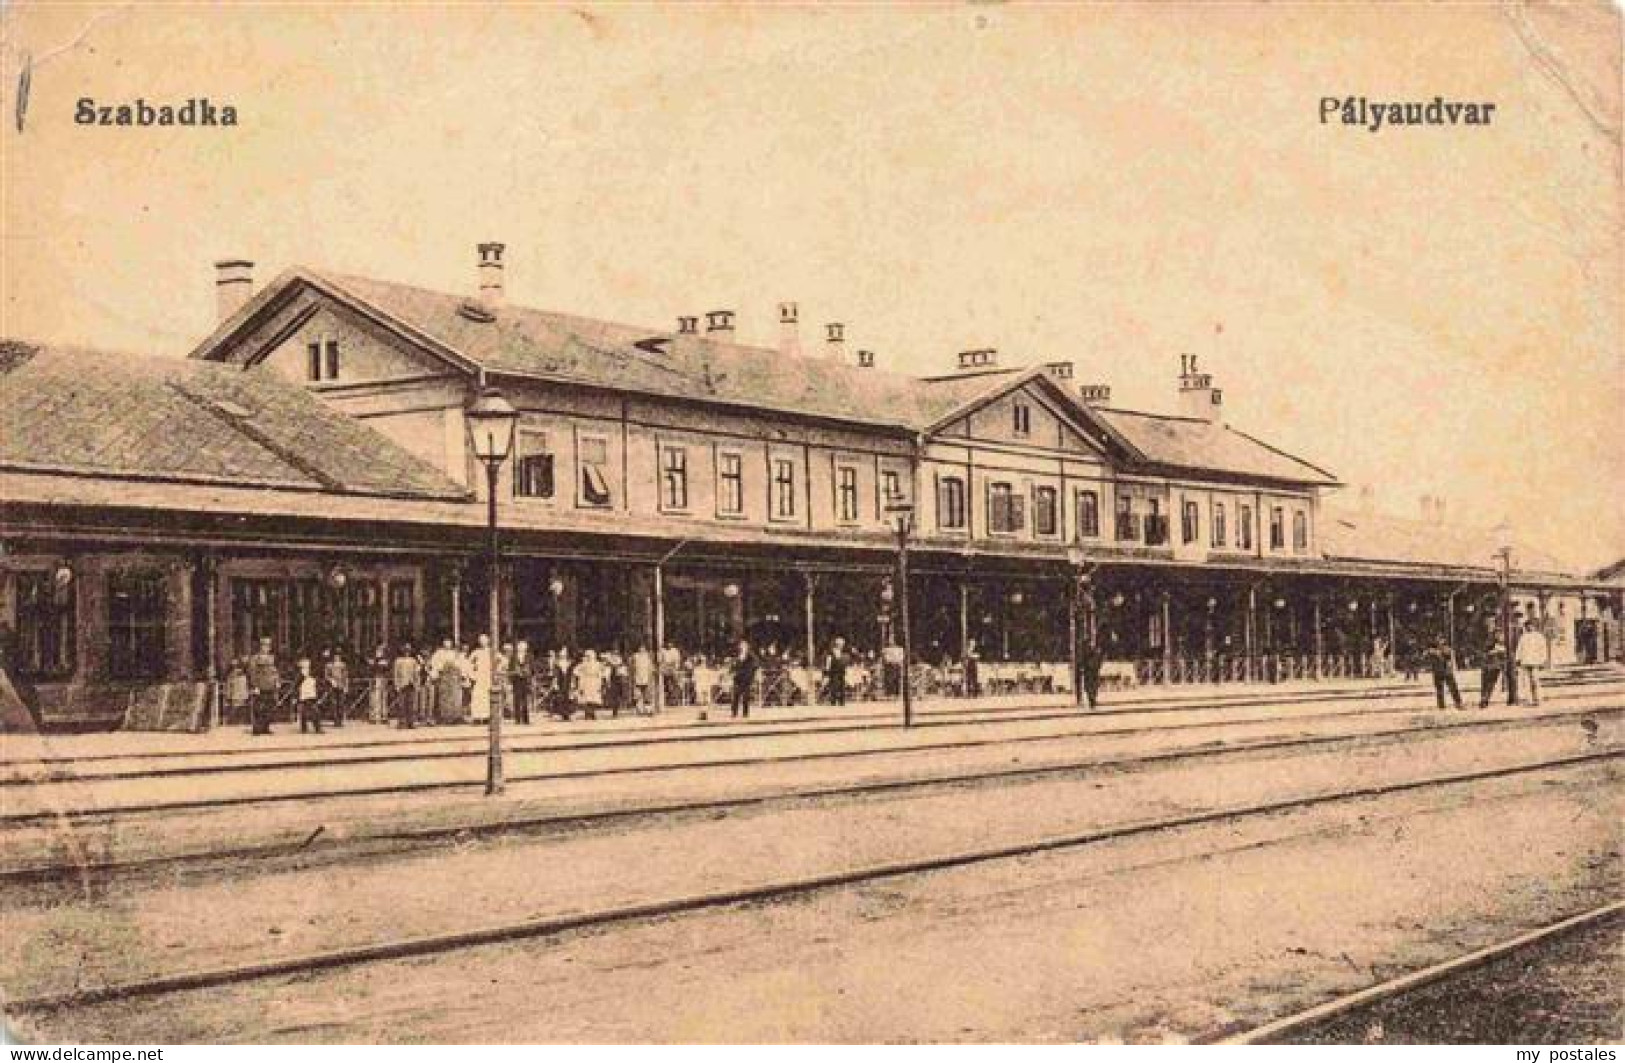 73976632 Szabadka_SUBOTICA_Serbija Palyaudvar Bahnhof - Serbien